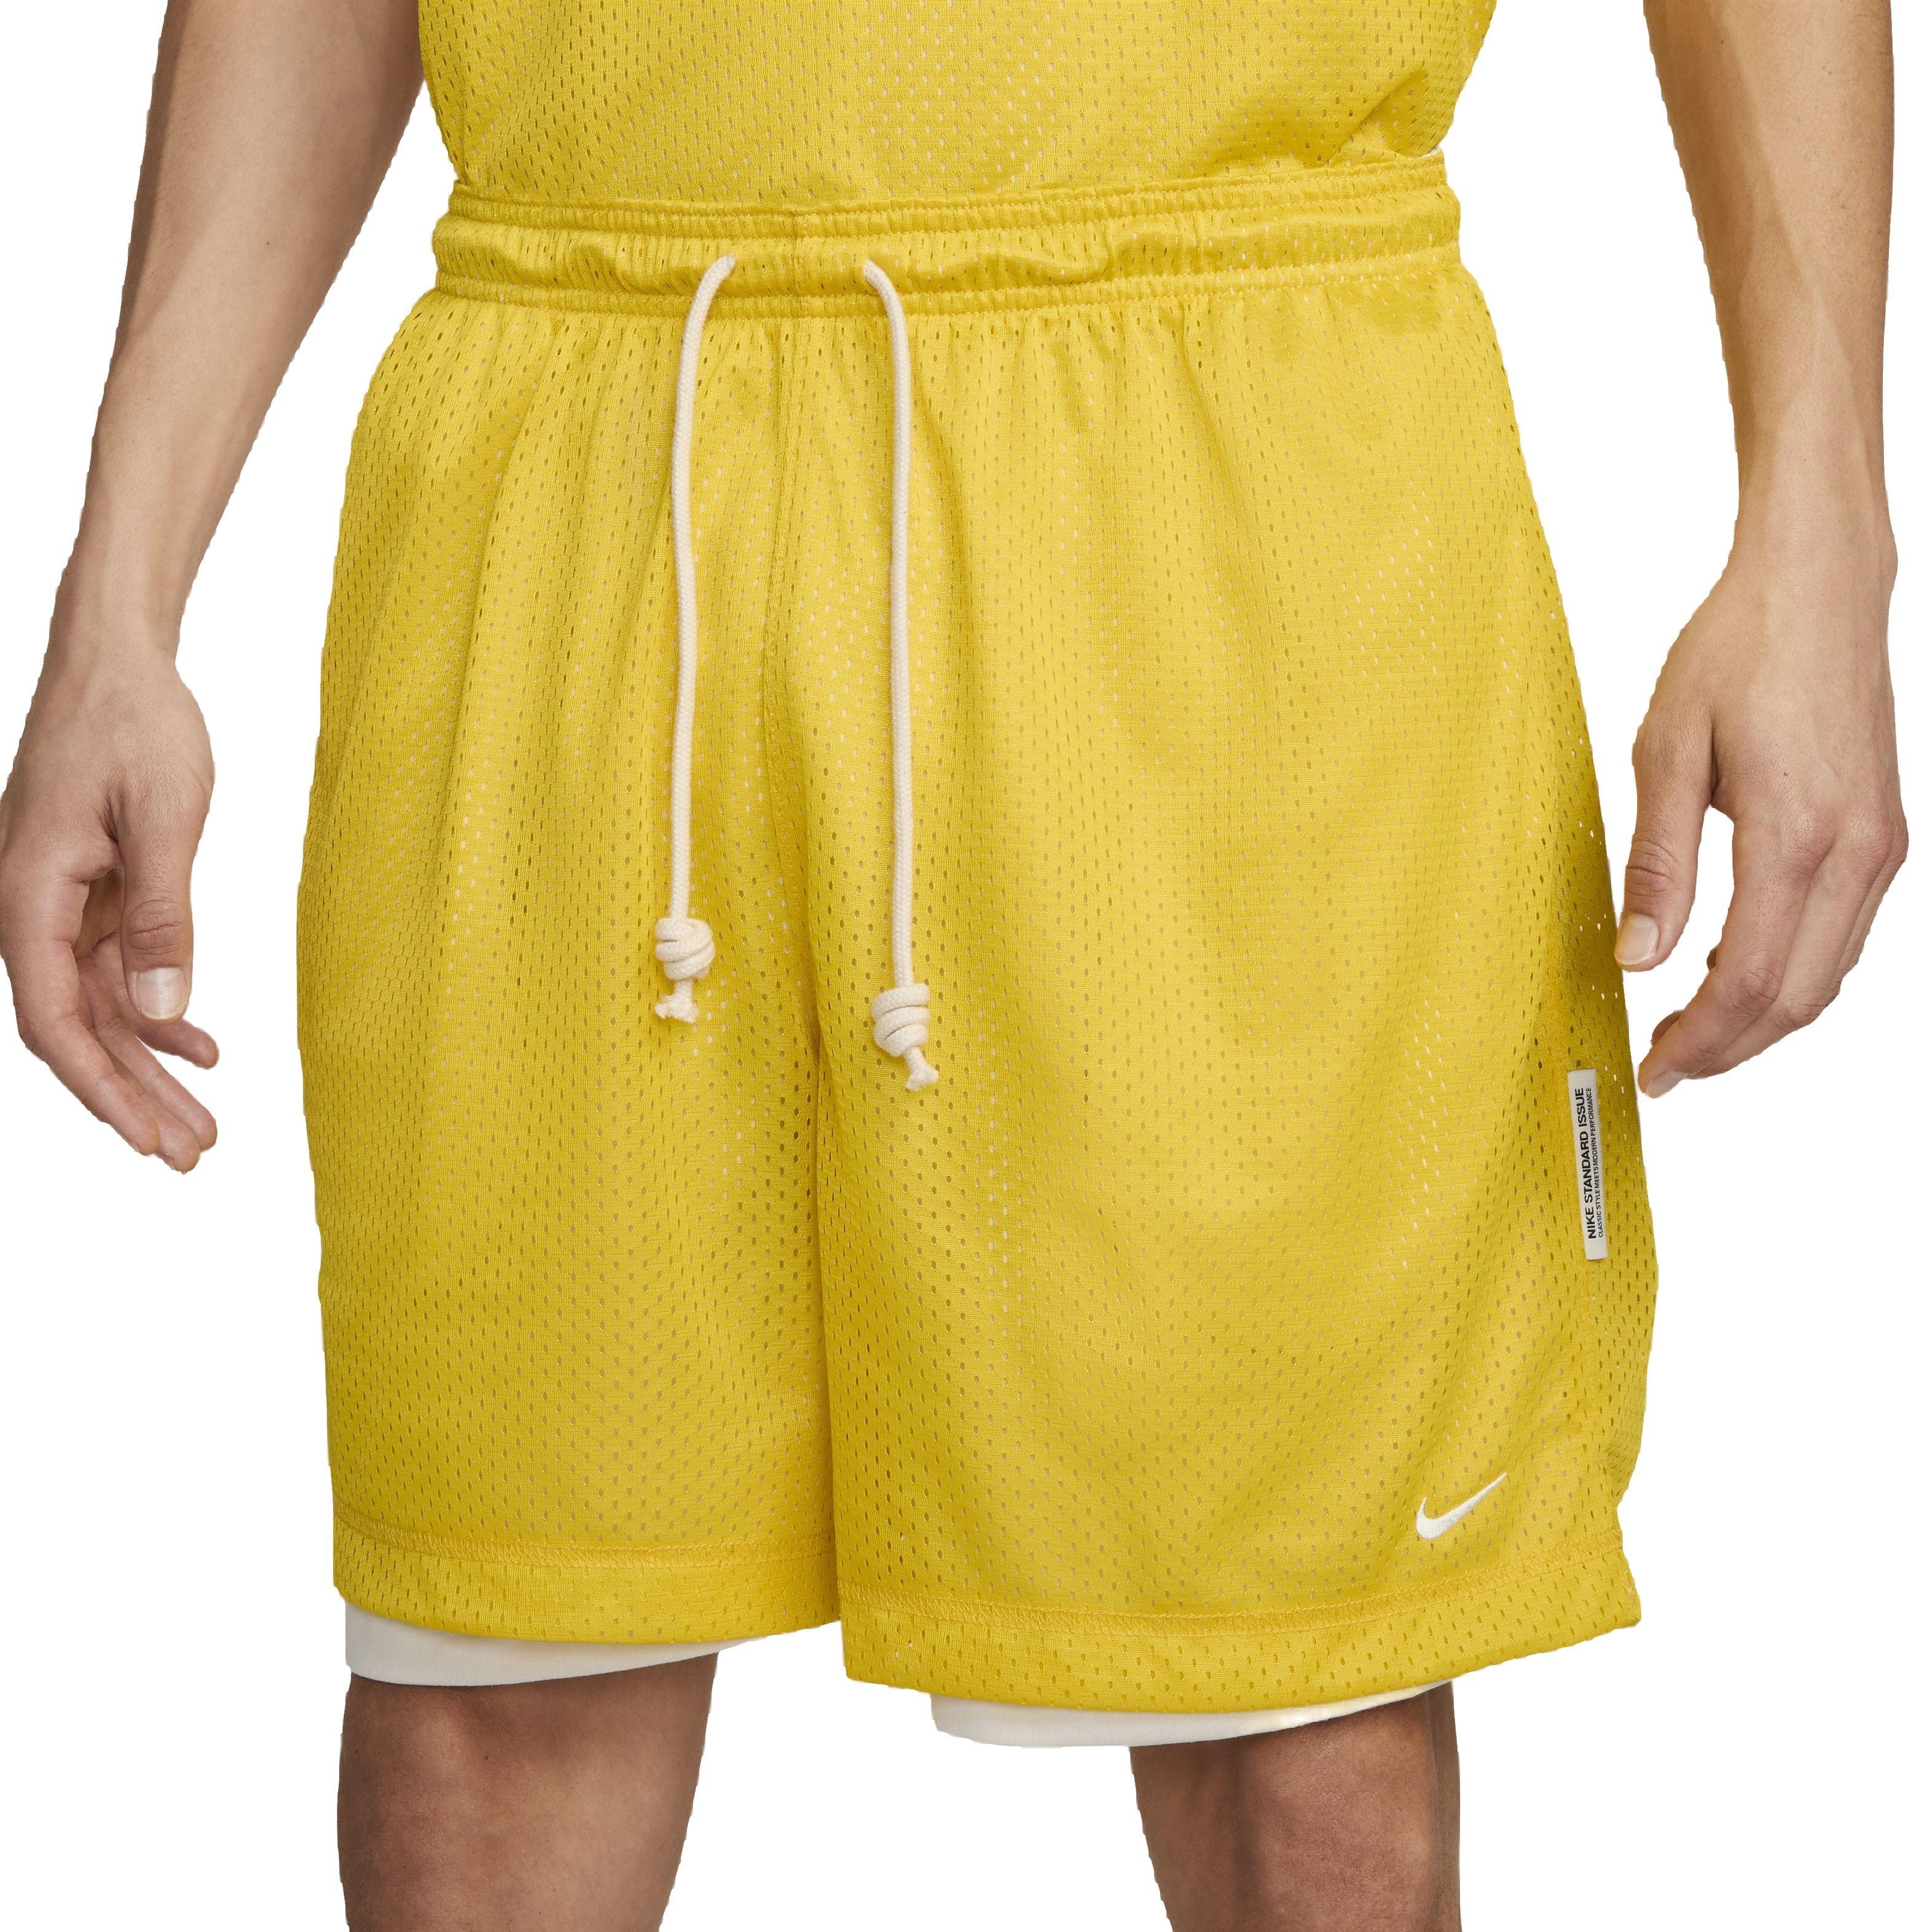 Nike Dri-FIT Standard Issue Men's Reversible 6 Basketball Shorts